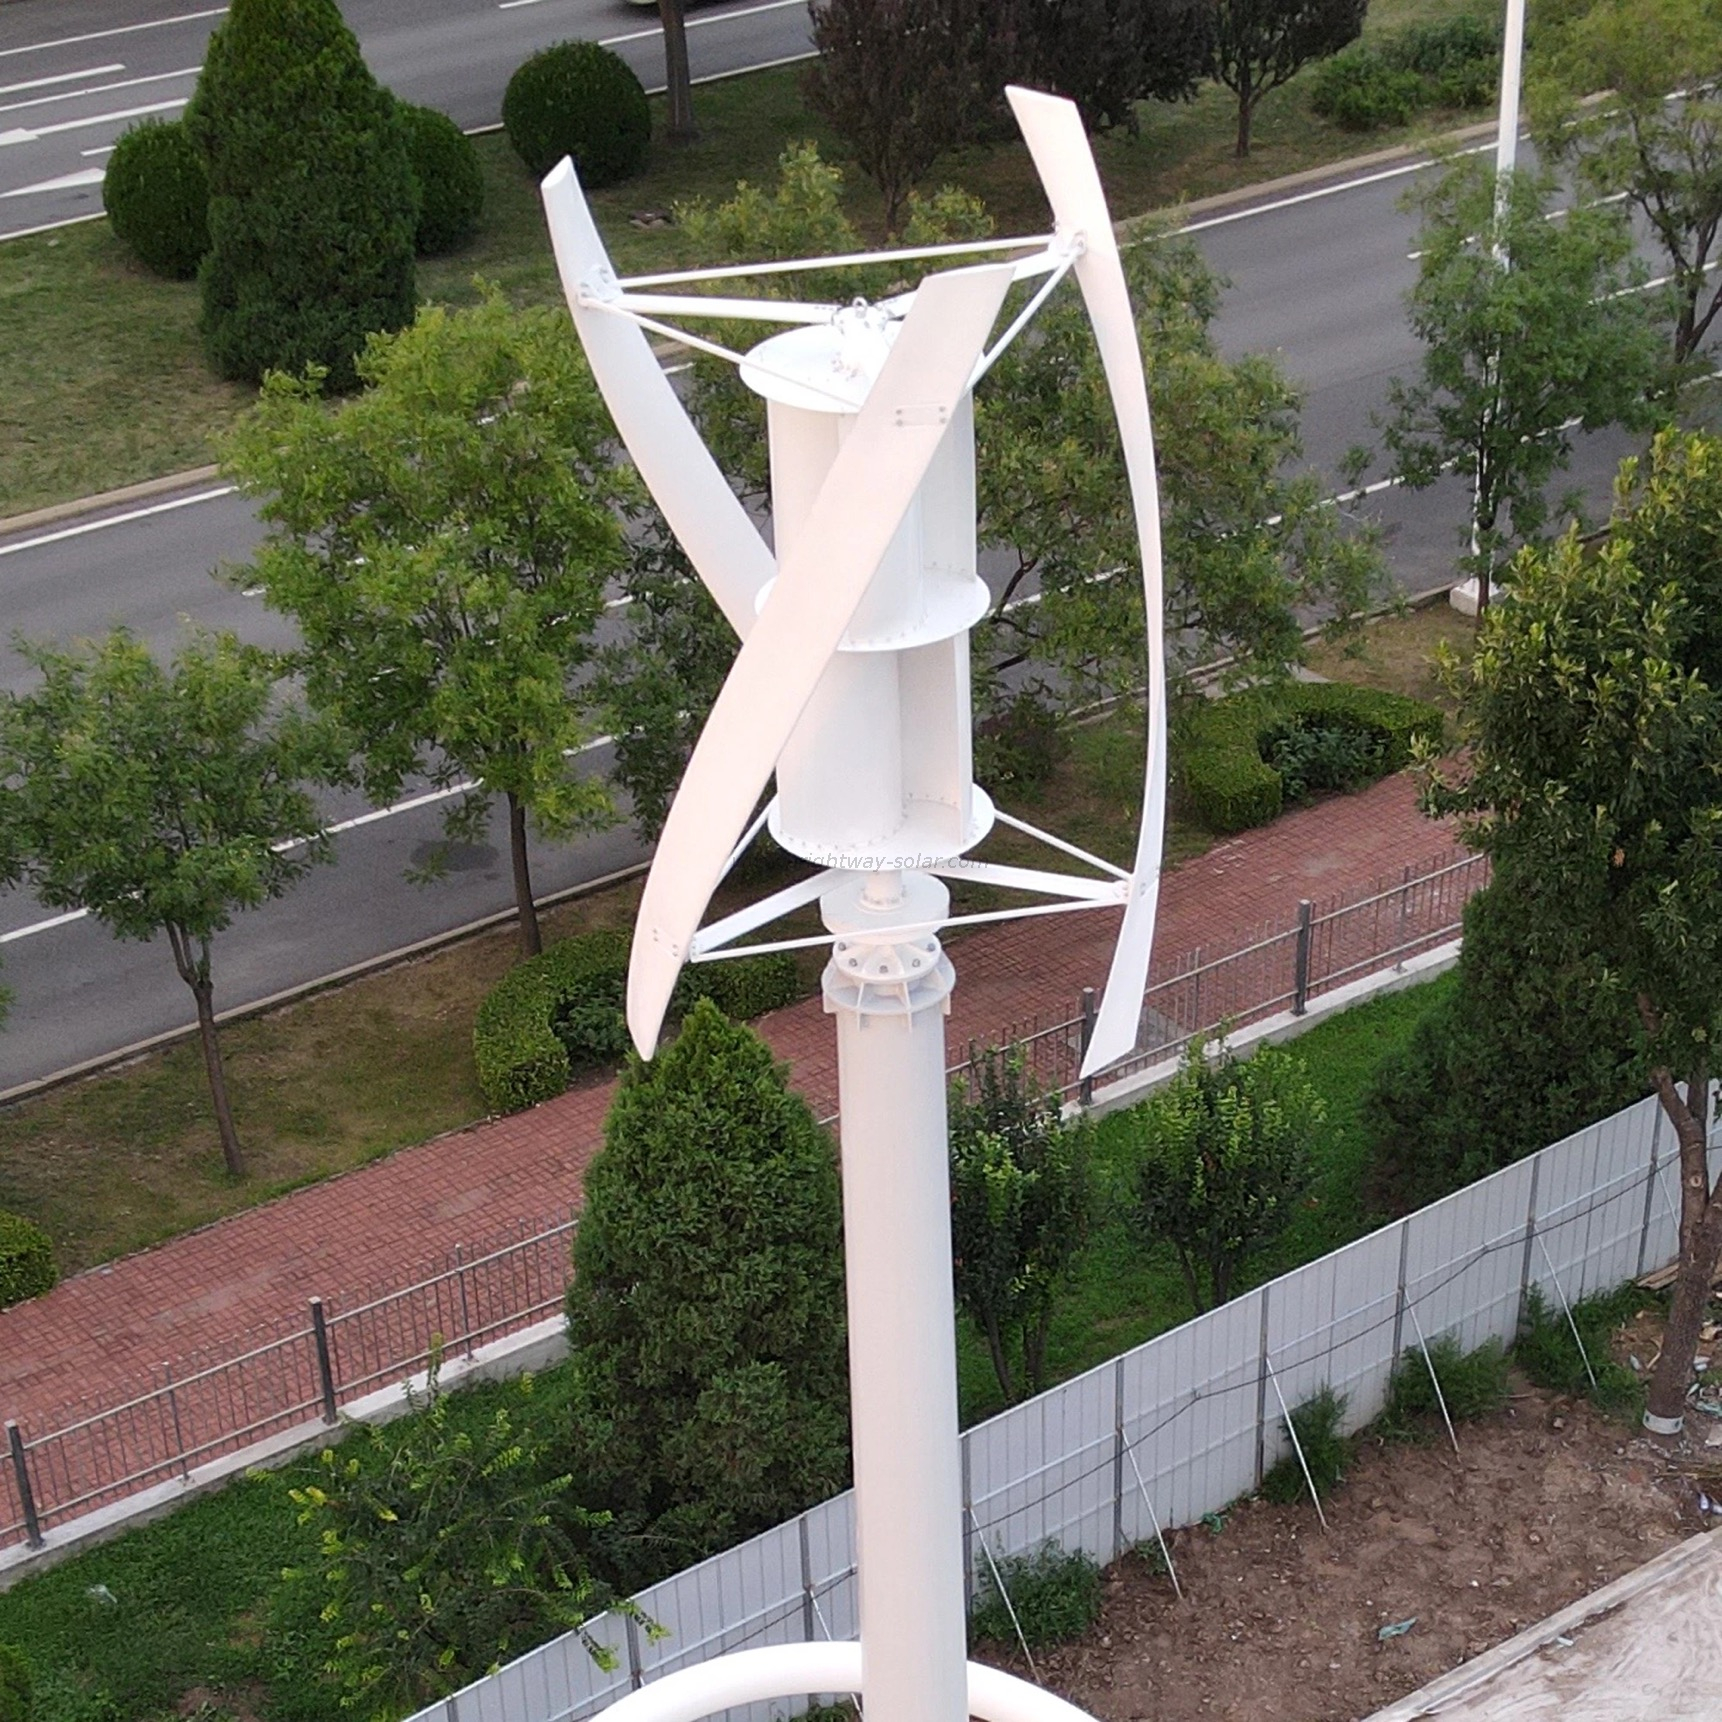 Brightway 5000W Vertical Axis Wind Turbine 2kW 3kW 5kW 10kW